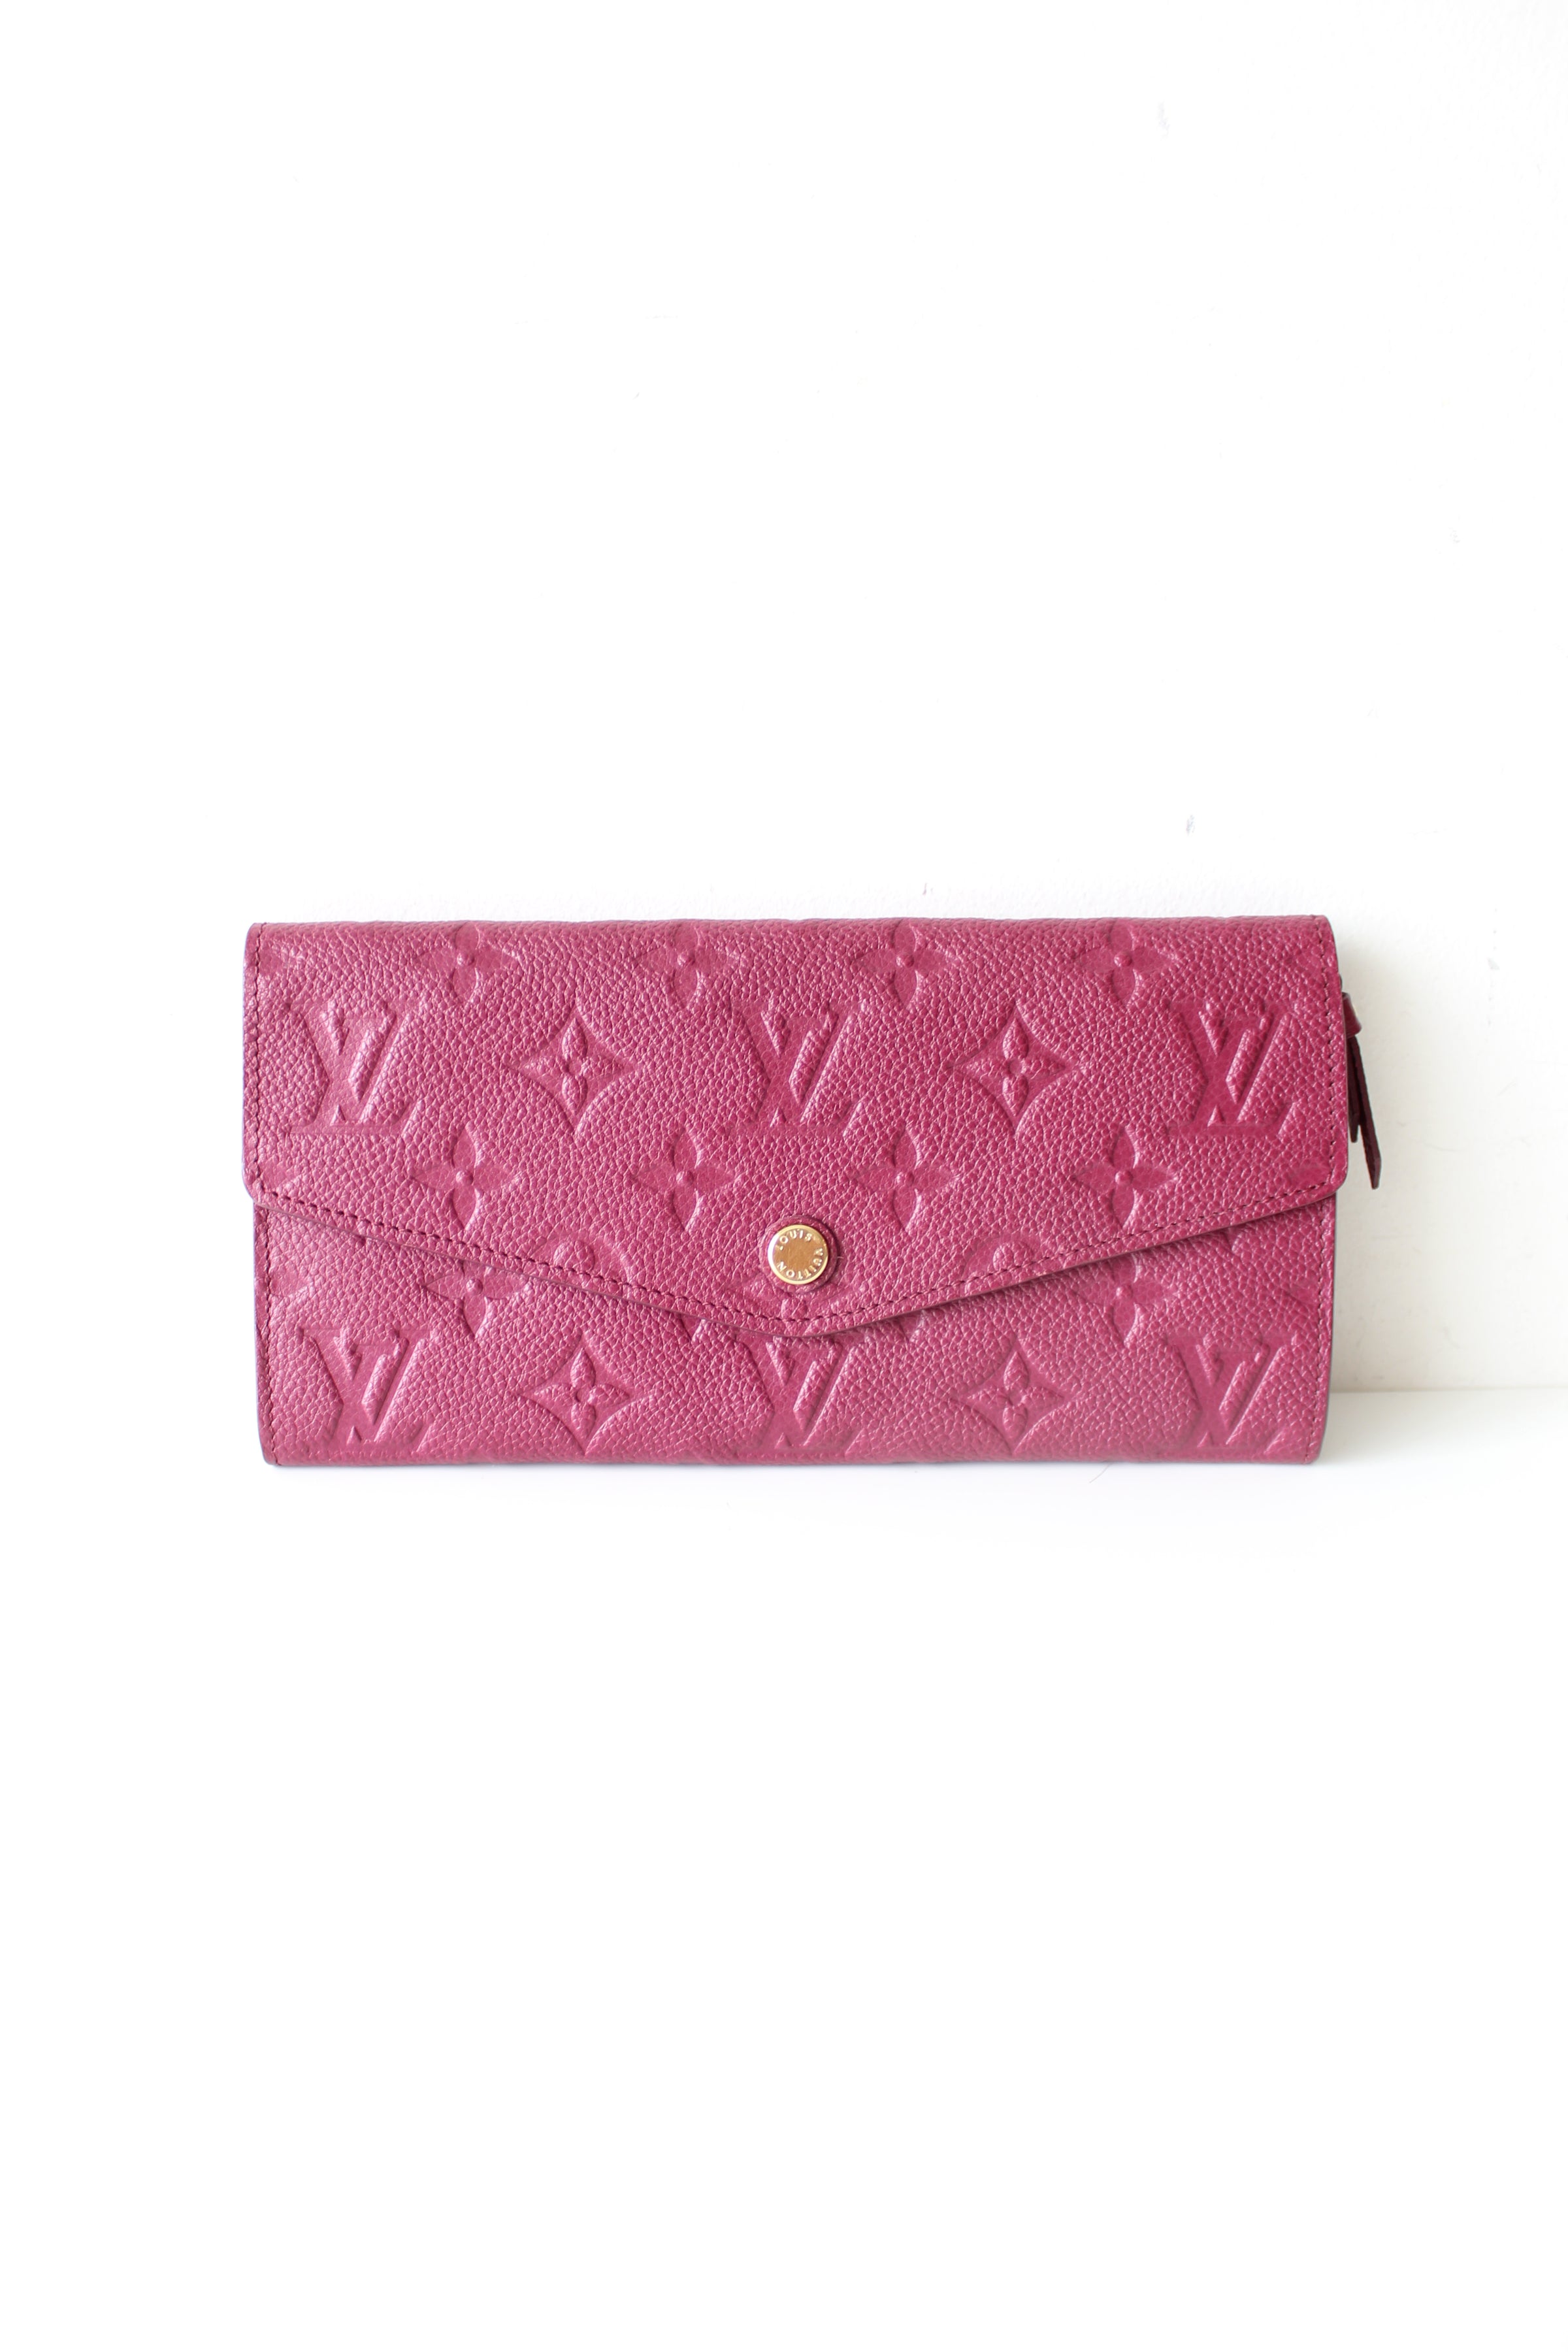 Louis Vuitton Red Empreinte Leather Curieuse Wallet